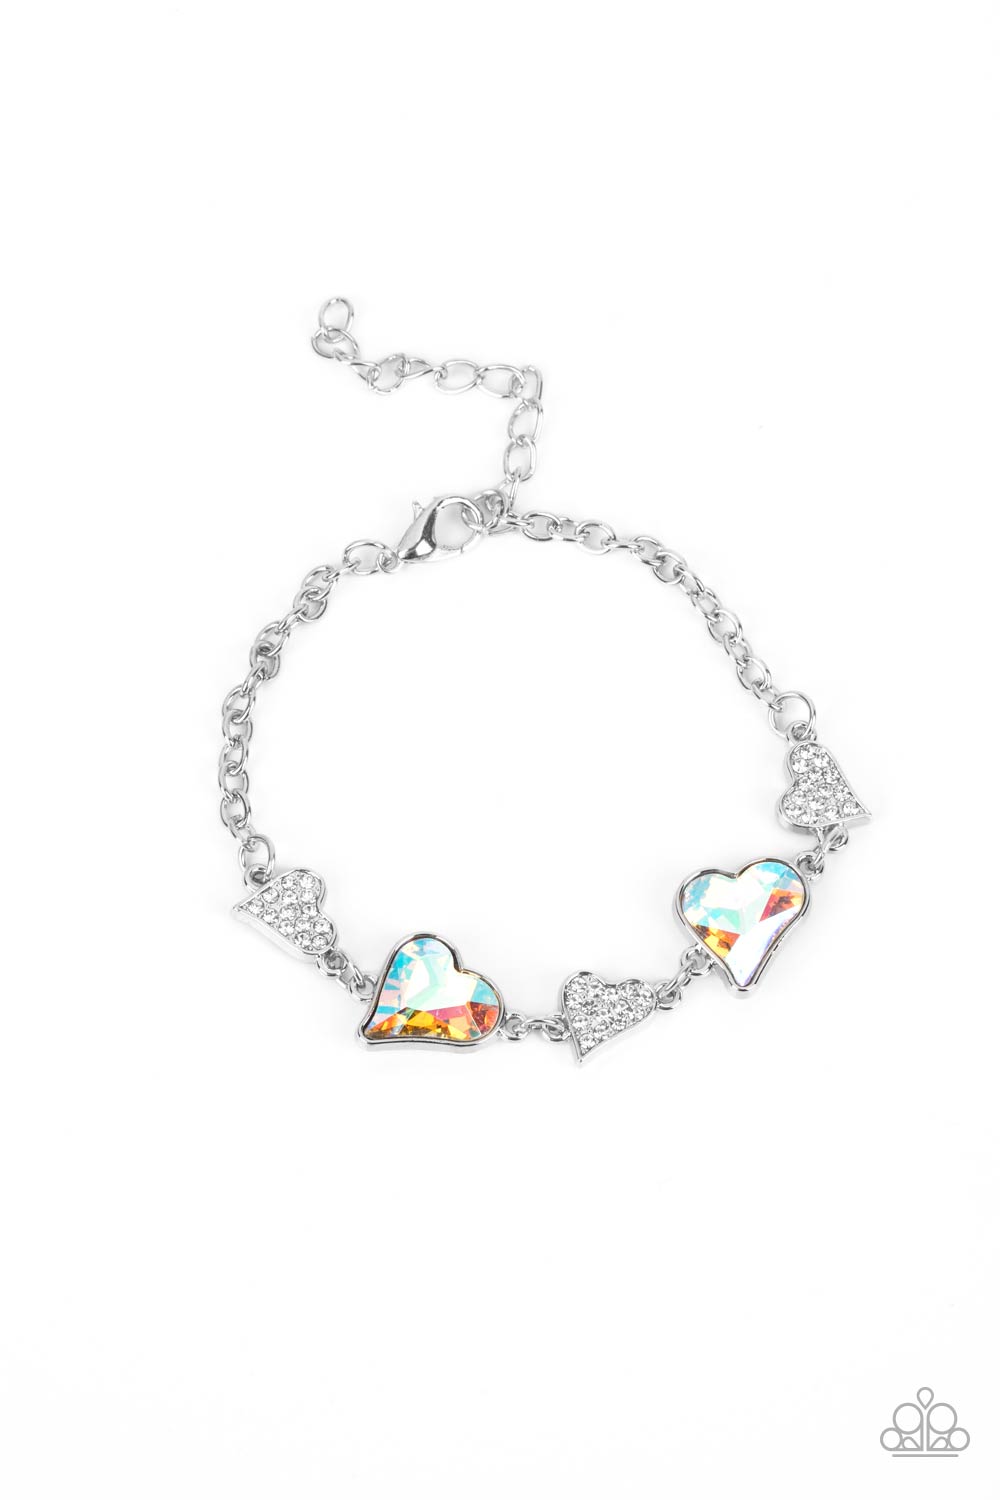 Cluelessly Crushing Multi Iridescent Rhinestone Heart Bracelet - Paparazzi Accessories- lightbox - CarasShop.com - $5 Jewelry by Cara Jewels